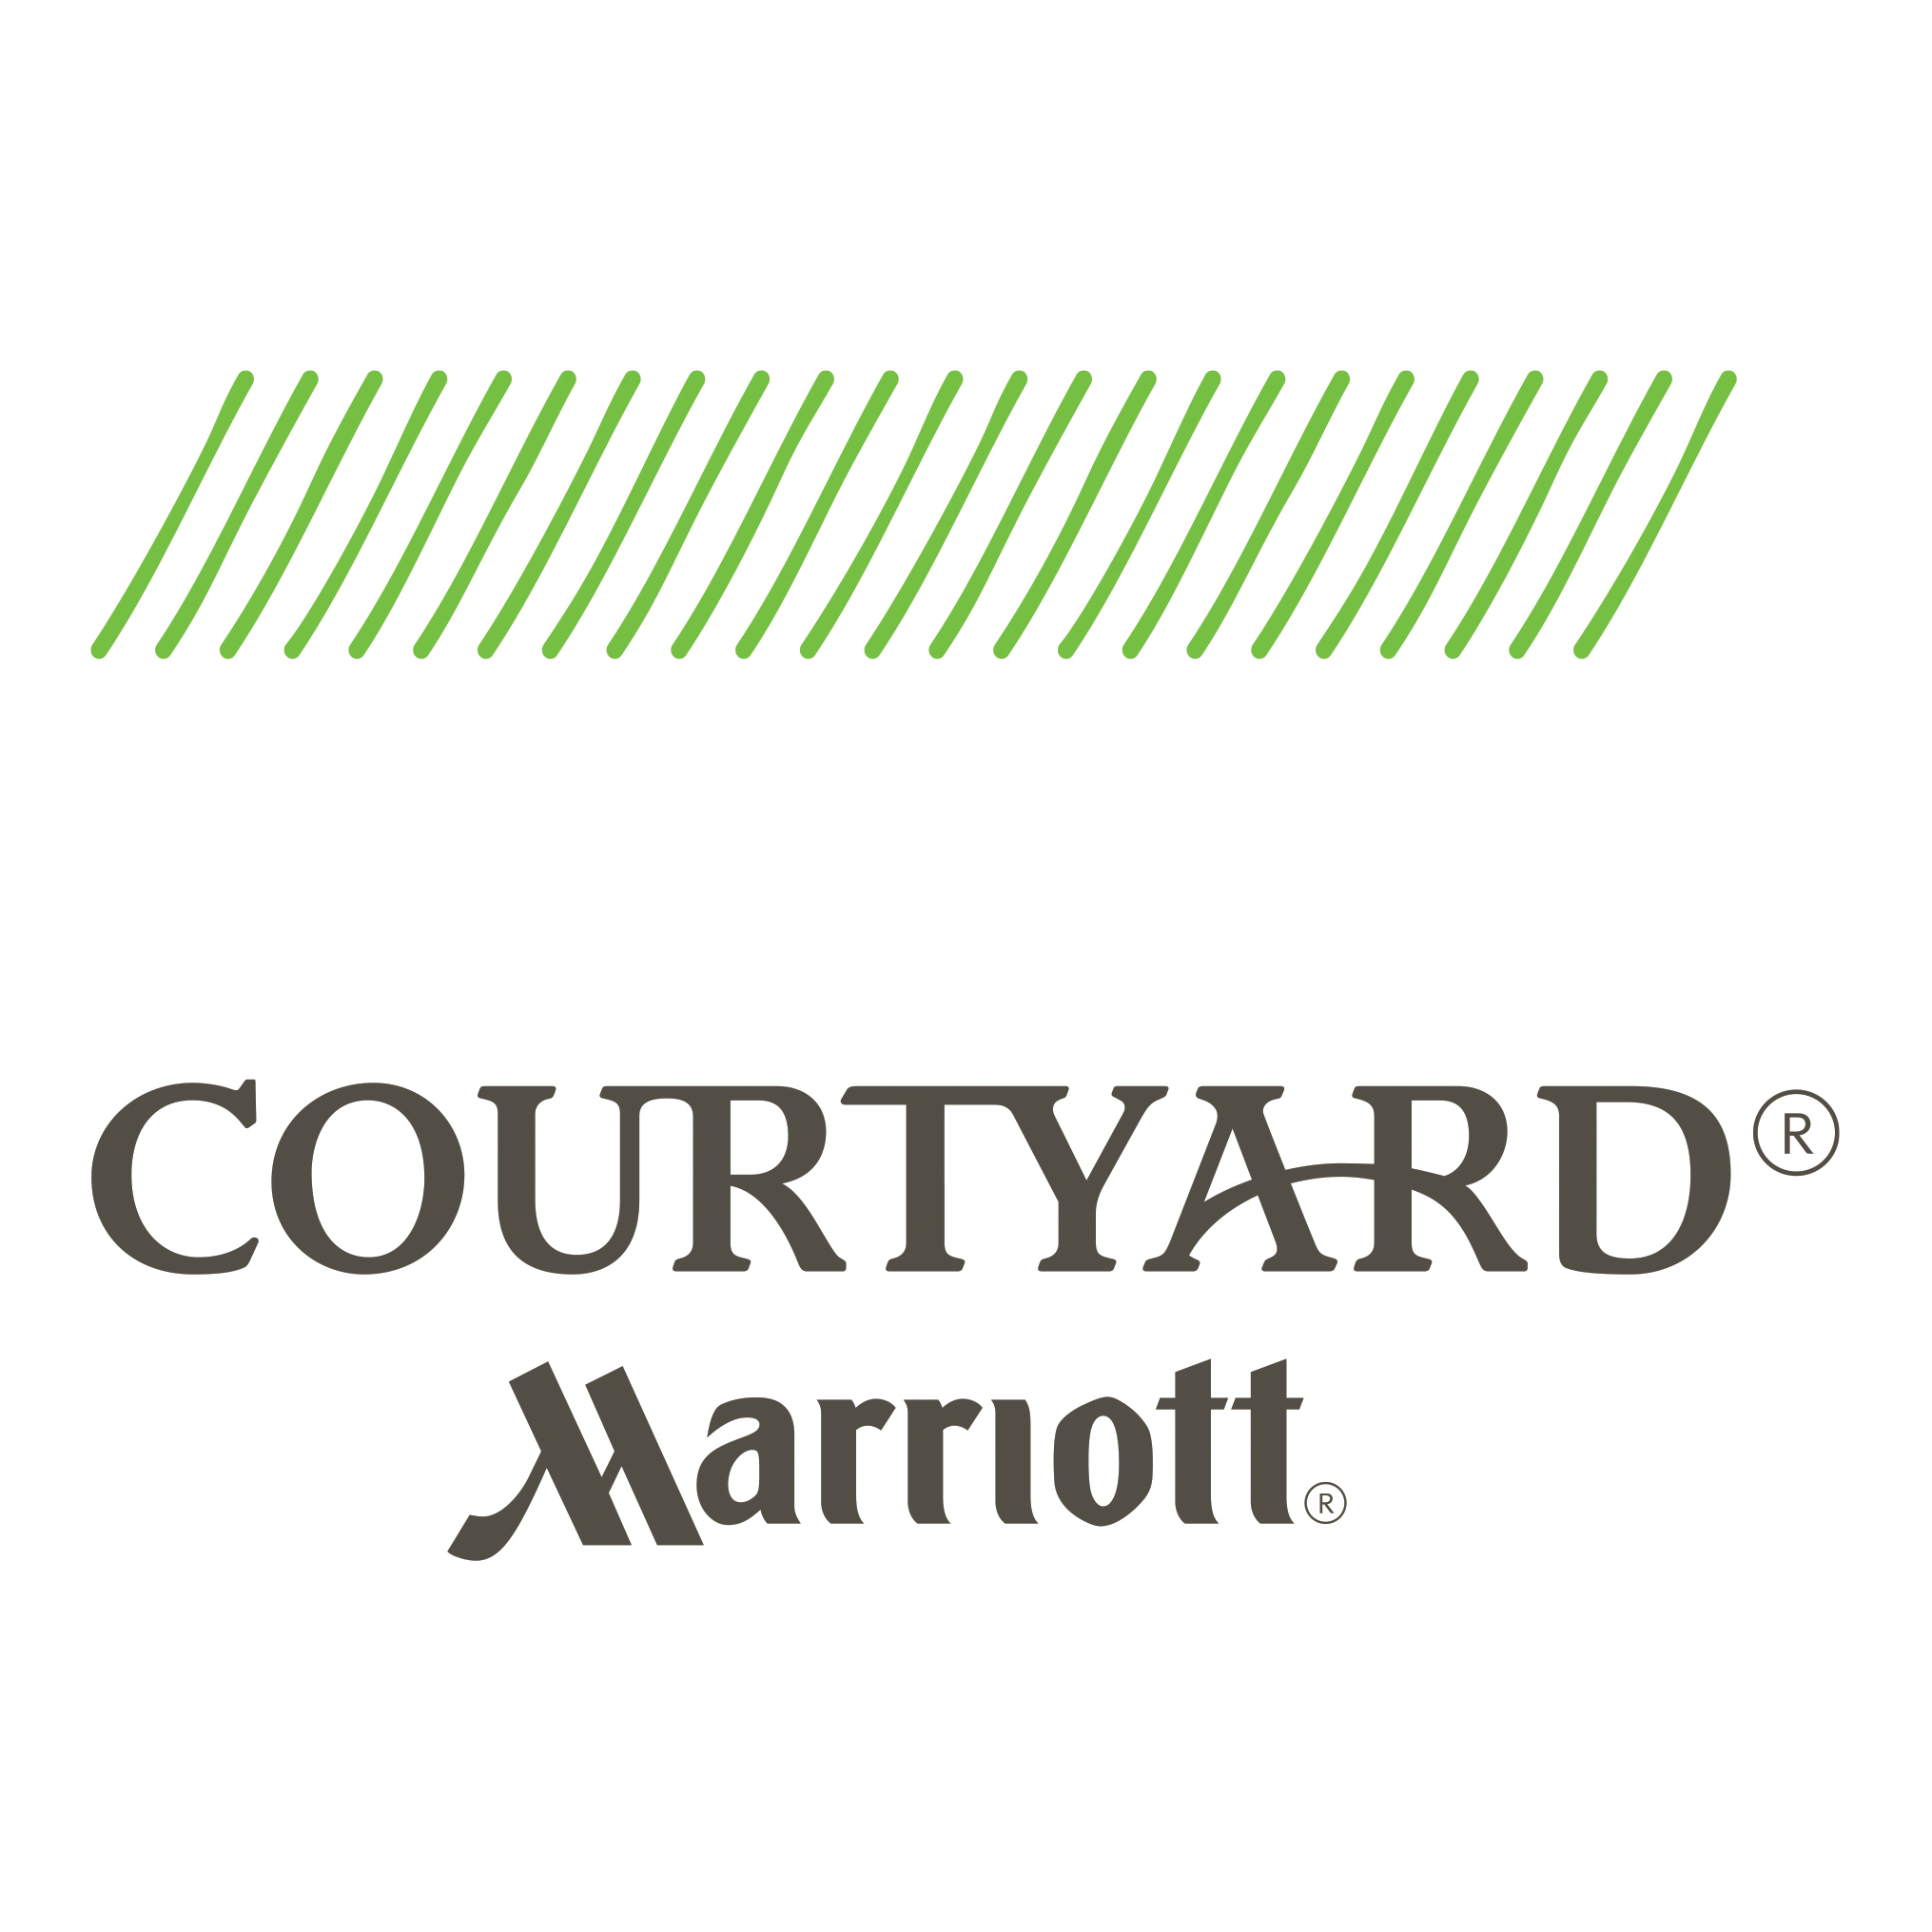 Courtyard by Marriott West Palm Beach Logo